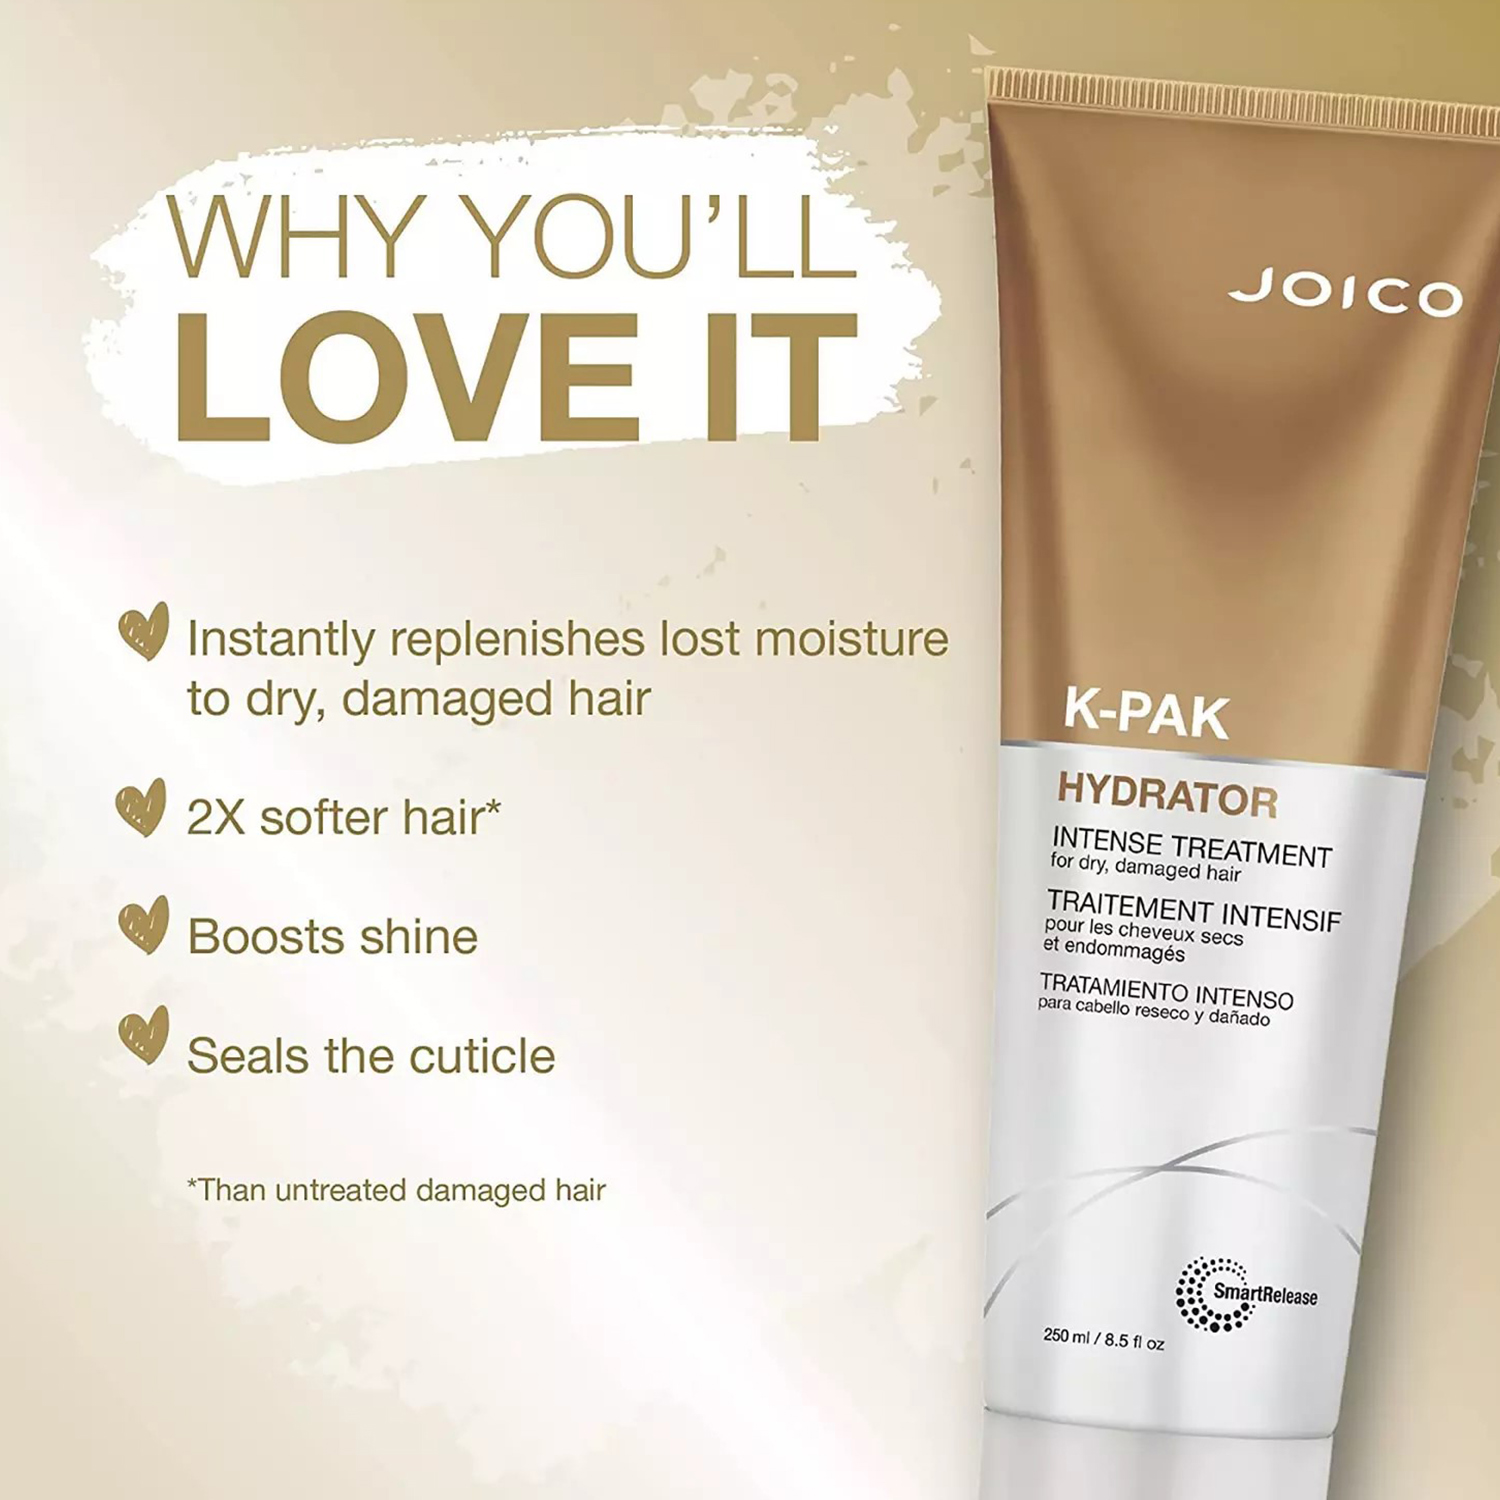 Joico K-Pak Intense Hydrator Treatment for Dry Damaged Hair, 8.5 oz - image 3 of 5